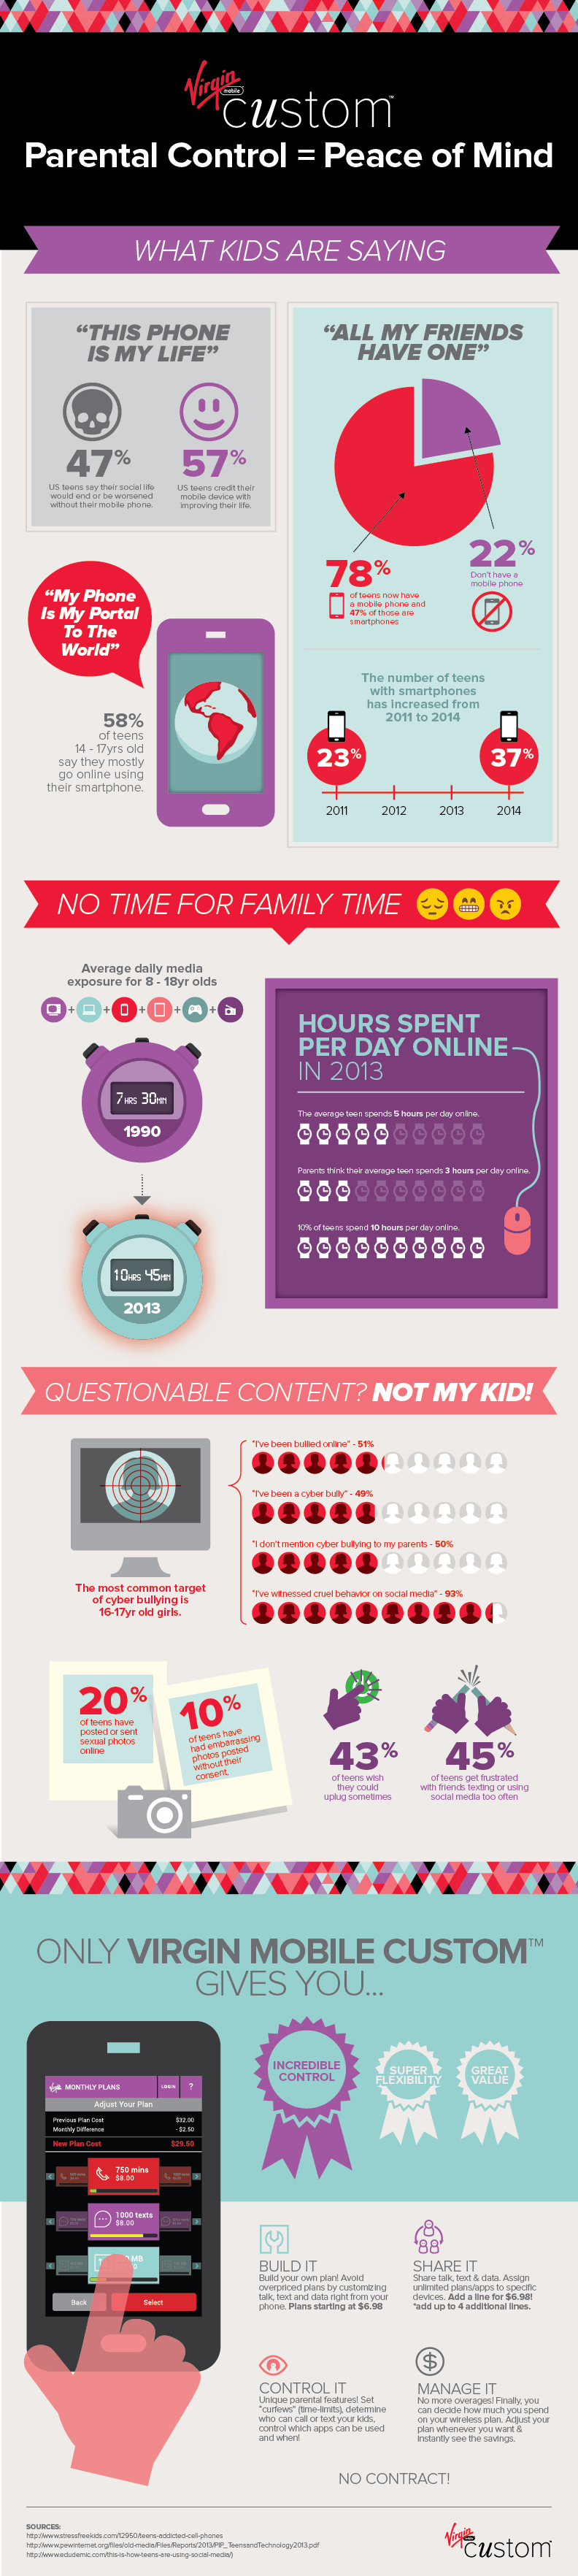 Virgin-Mobile-Infographic